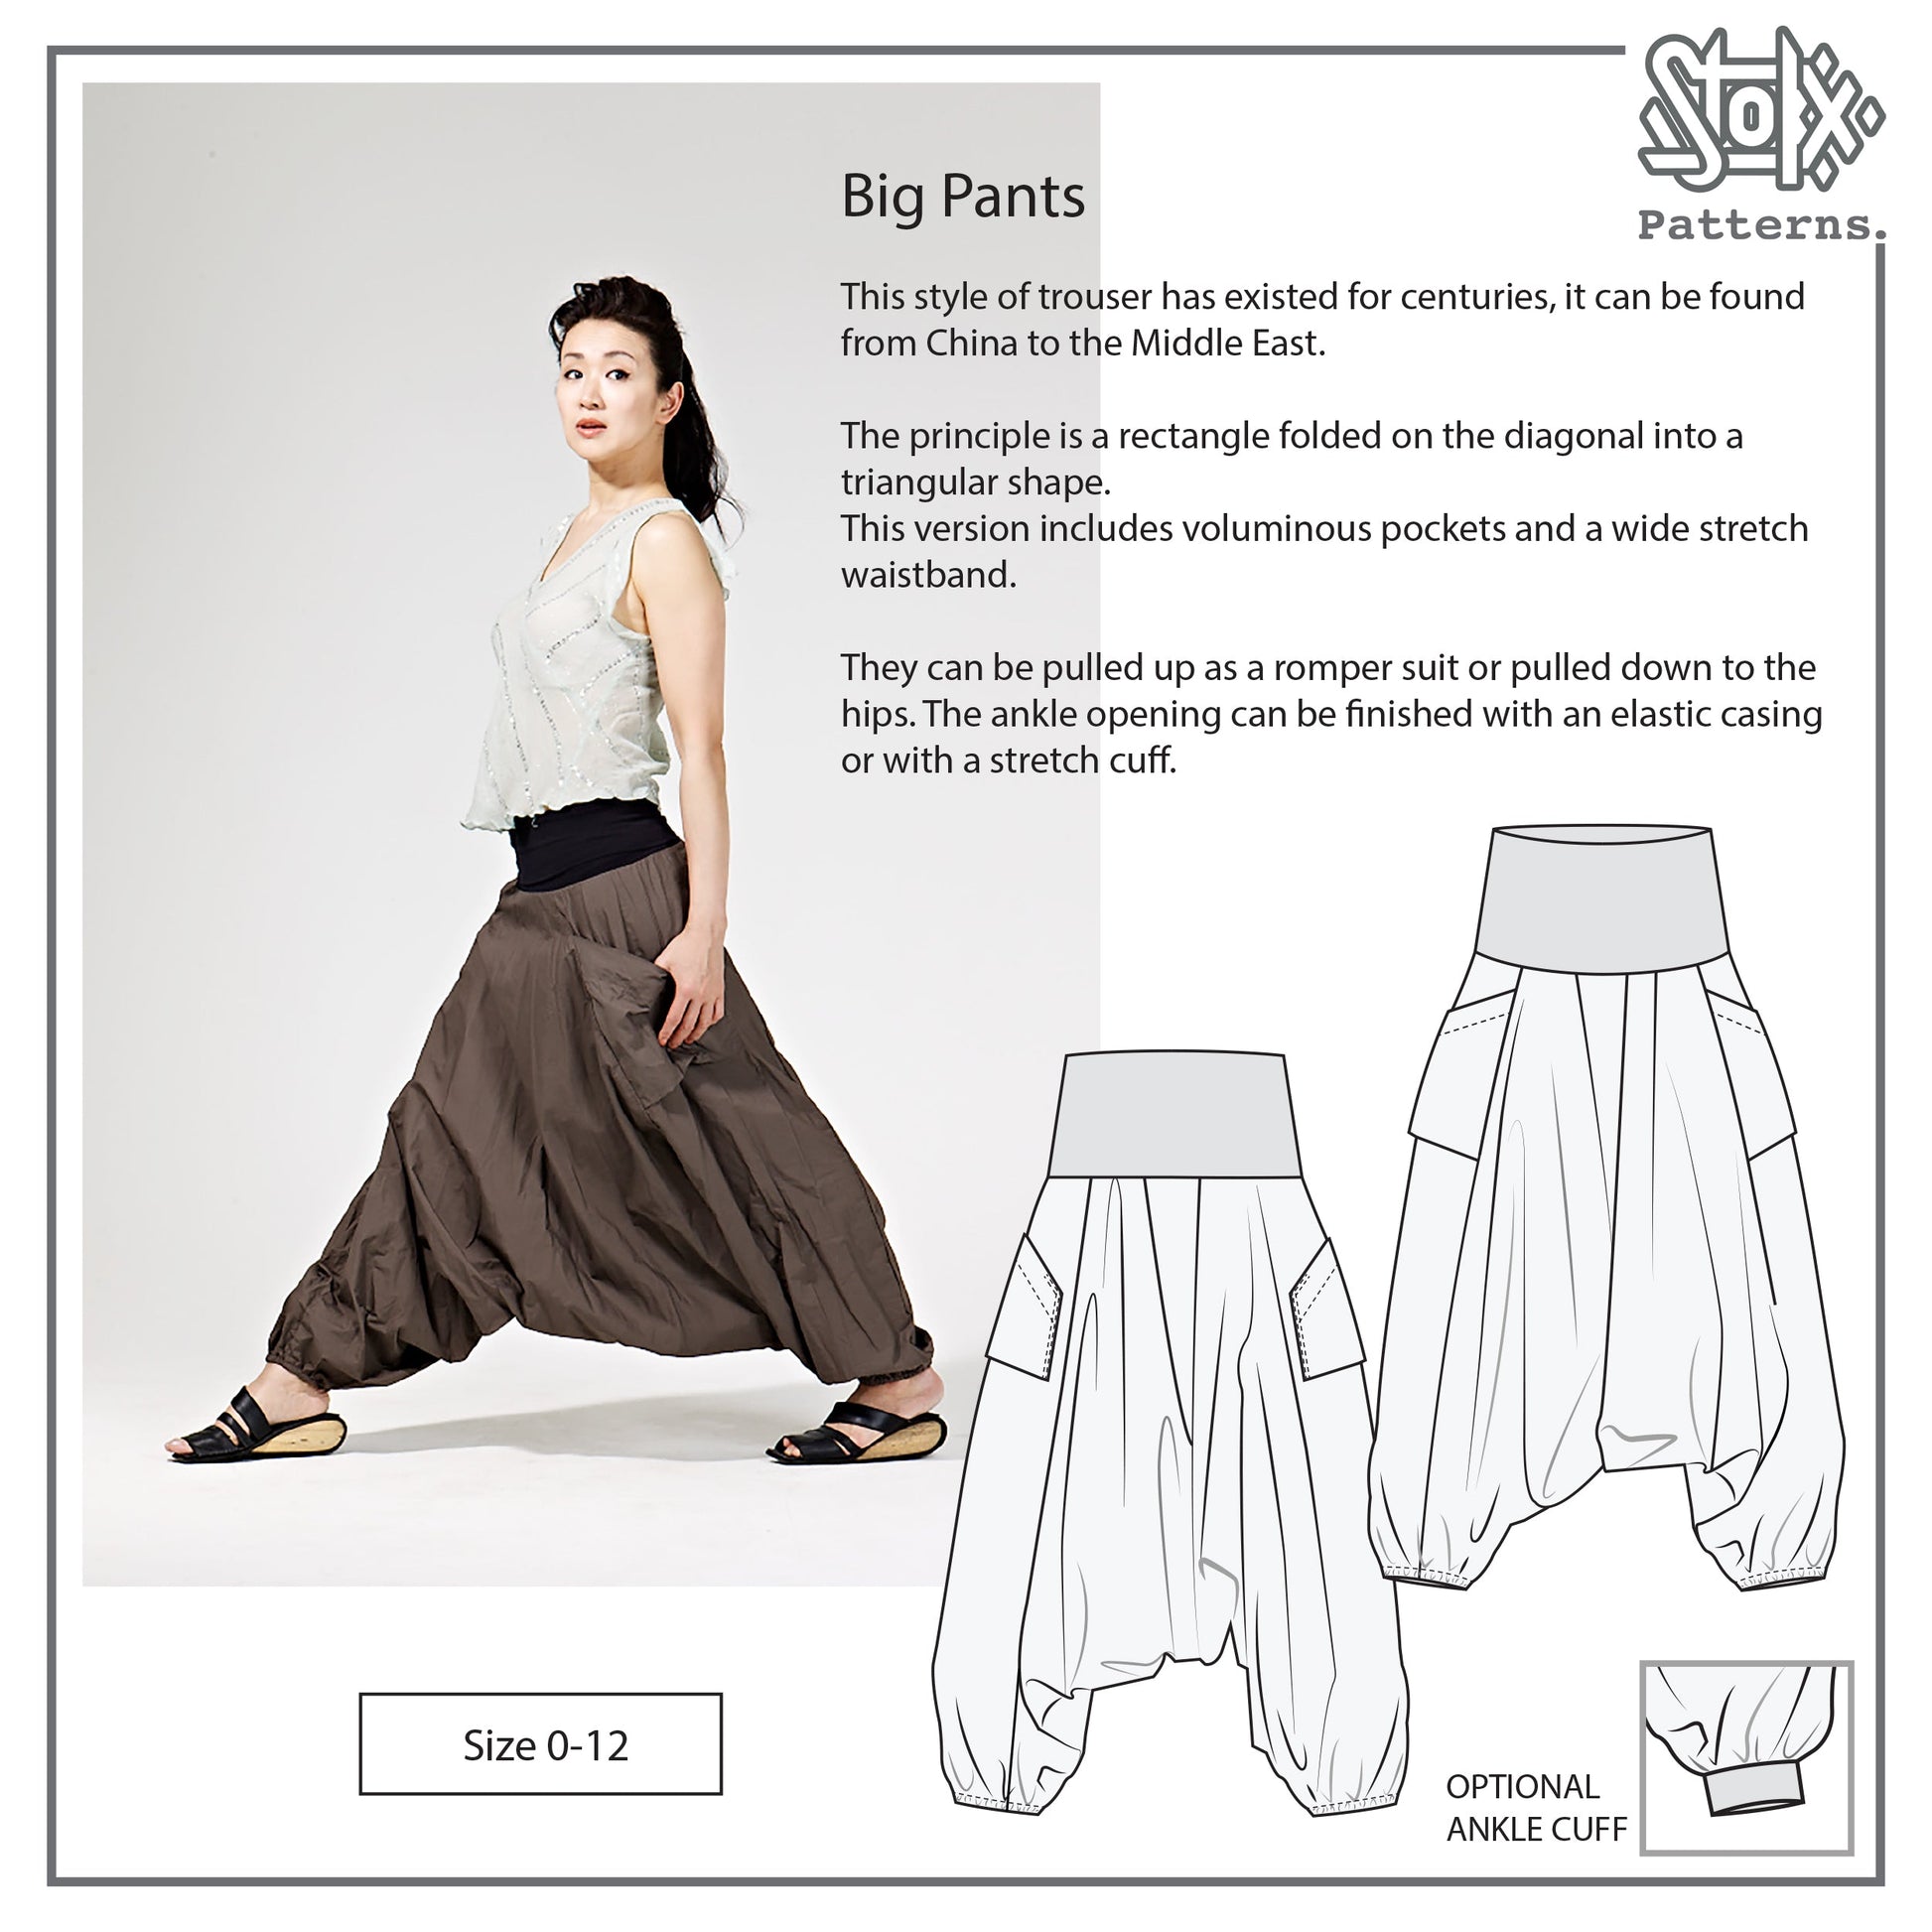 Big Pants – Stokx Patterns